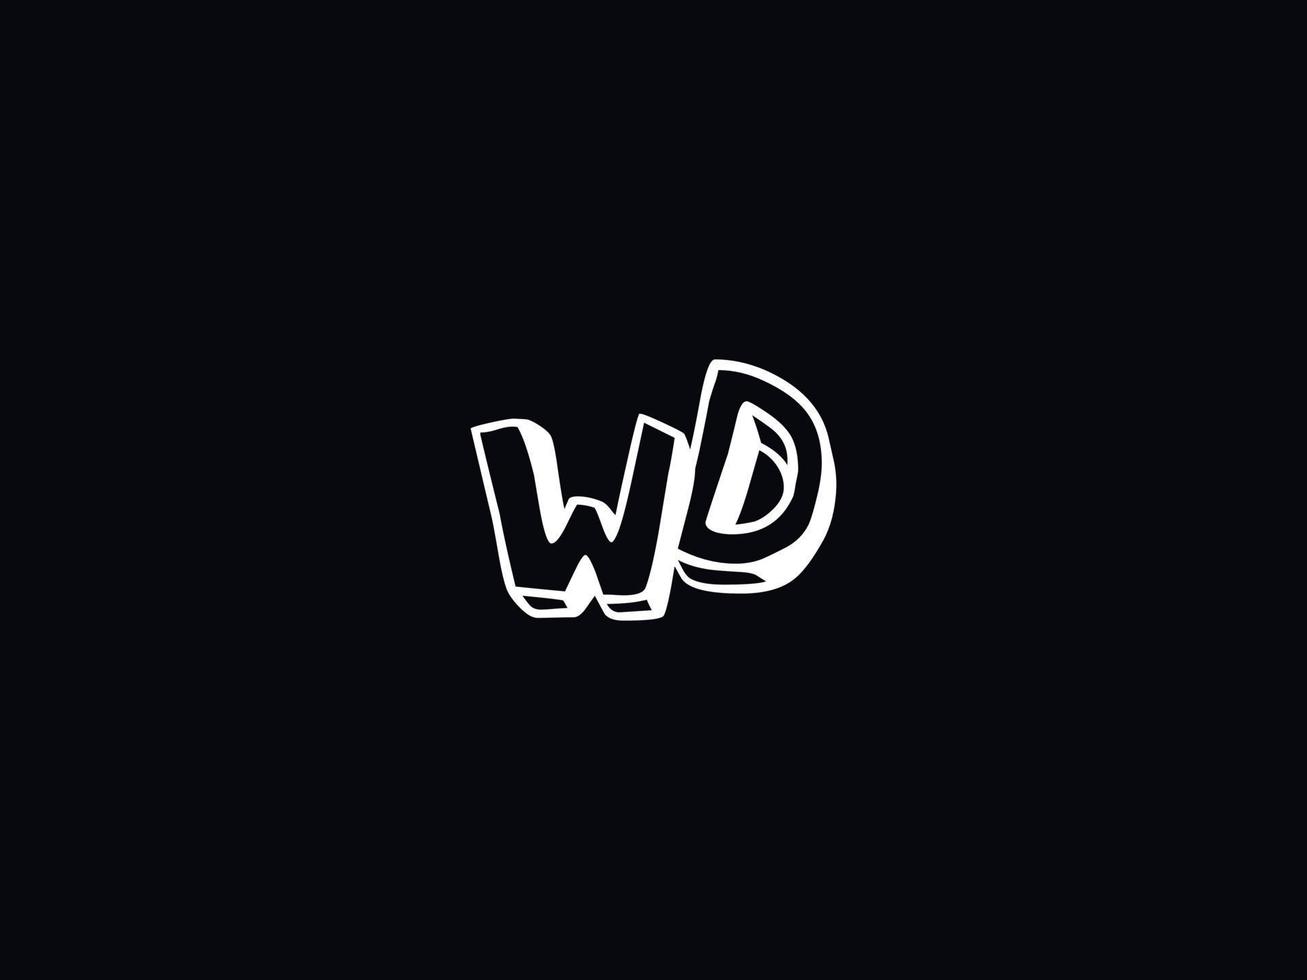 único wd logo icono, creativo wd vistoso letra logo vector